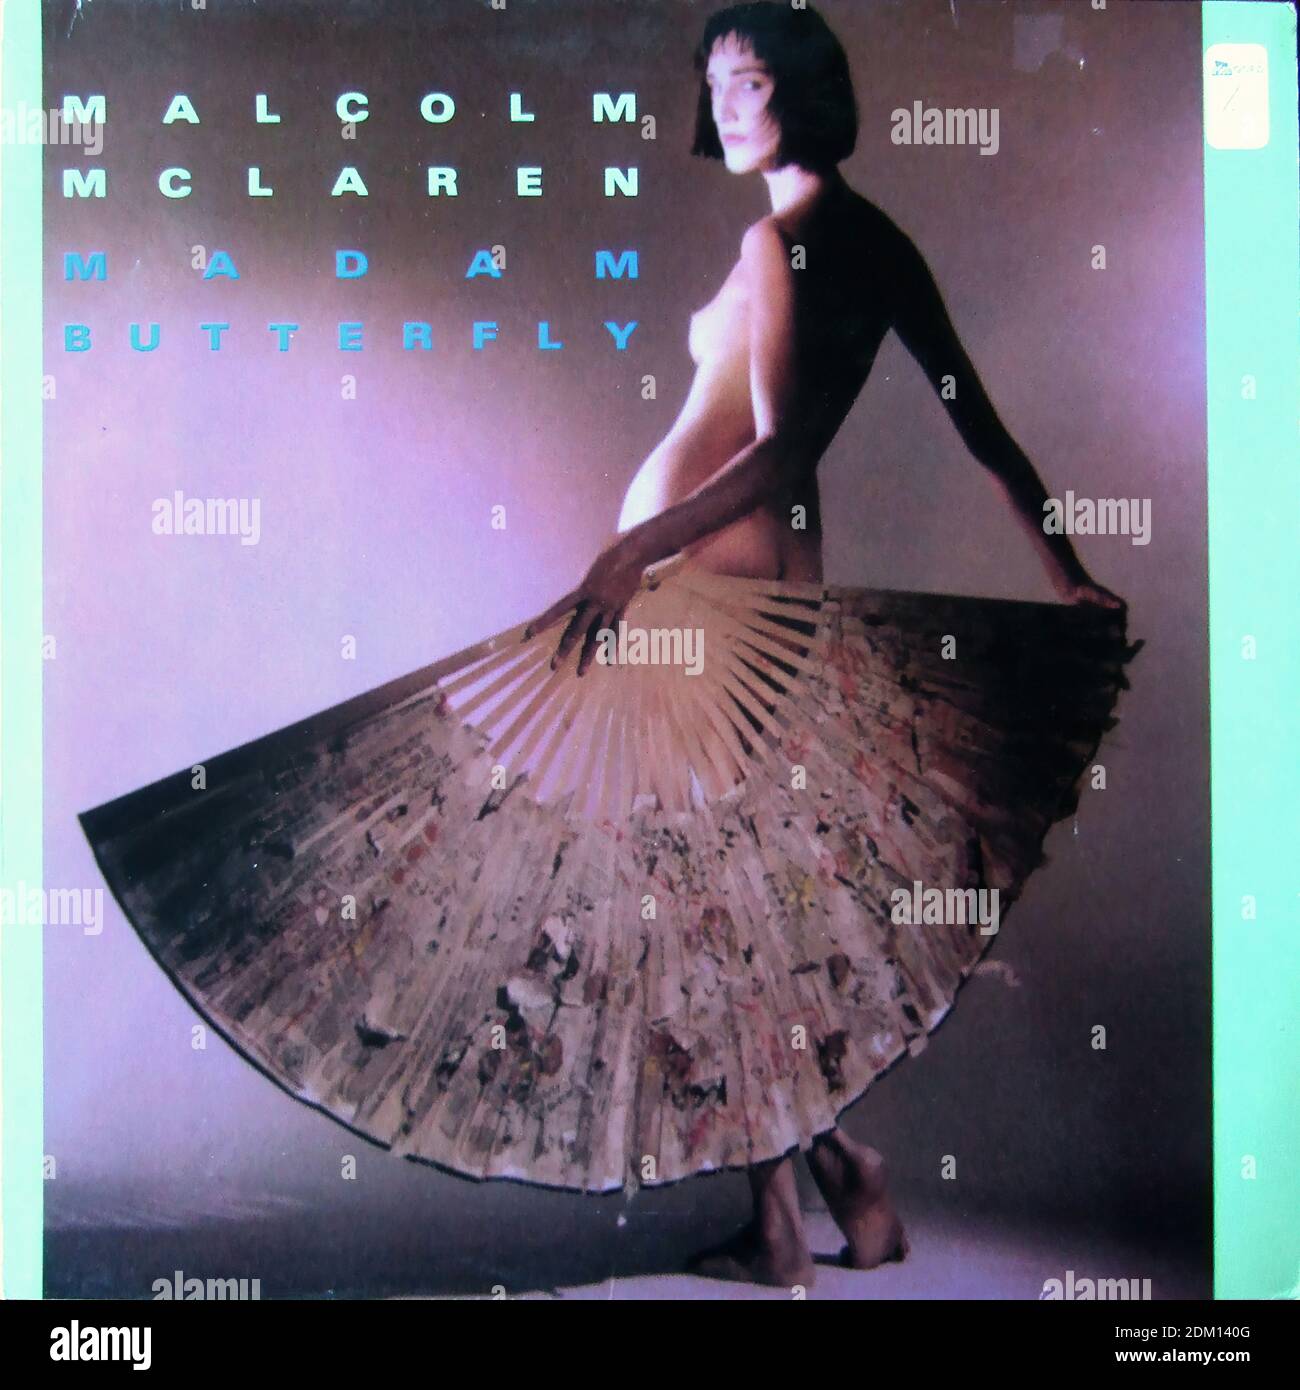 Malcolm McLaren - Madam Butterfly - UN Bel di Vecremo  Erstes Paar aus, Betty Ann White, Deborah Cole, 601 503-213, Maxi-Single 45t, 12 inch - Vintage Vinyl Album Cover Stockfoto